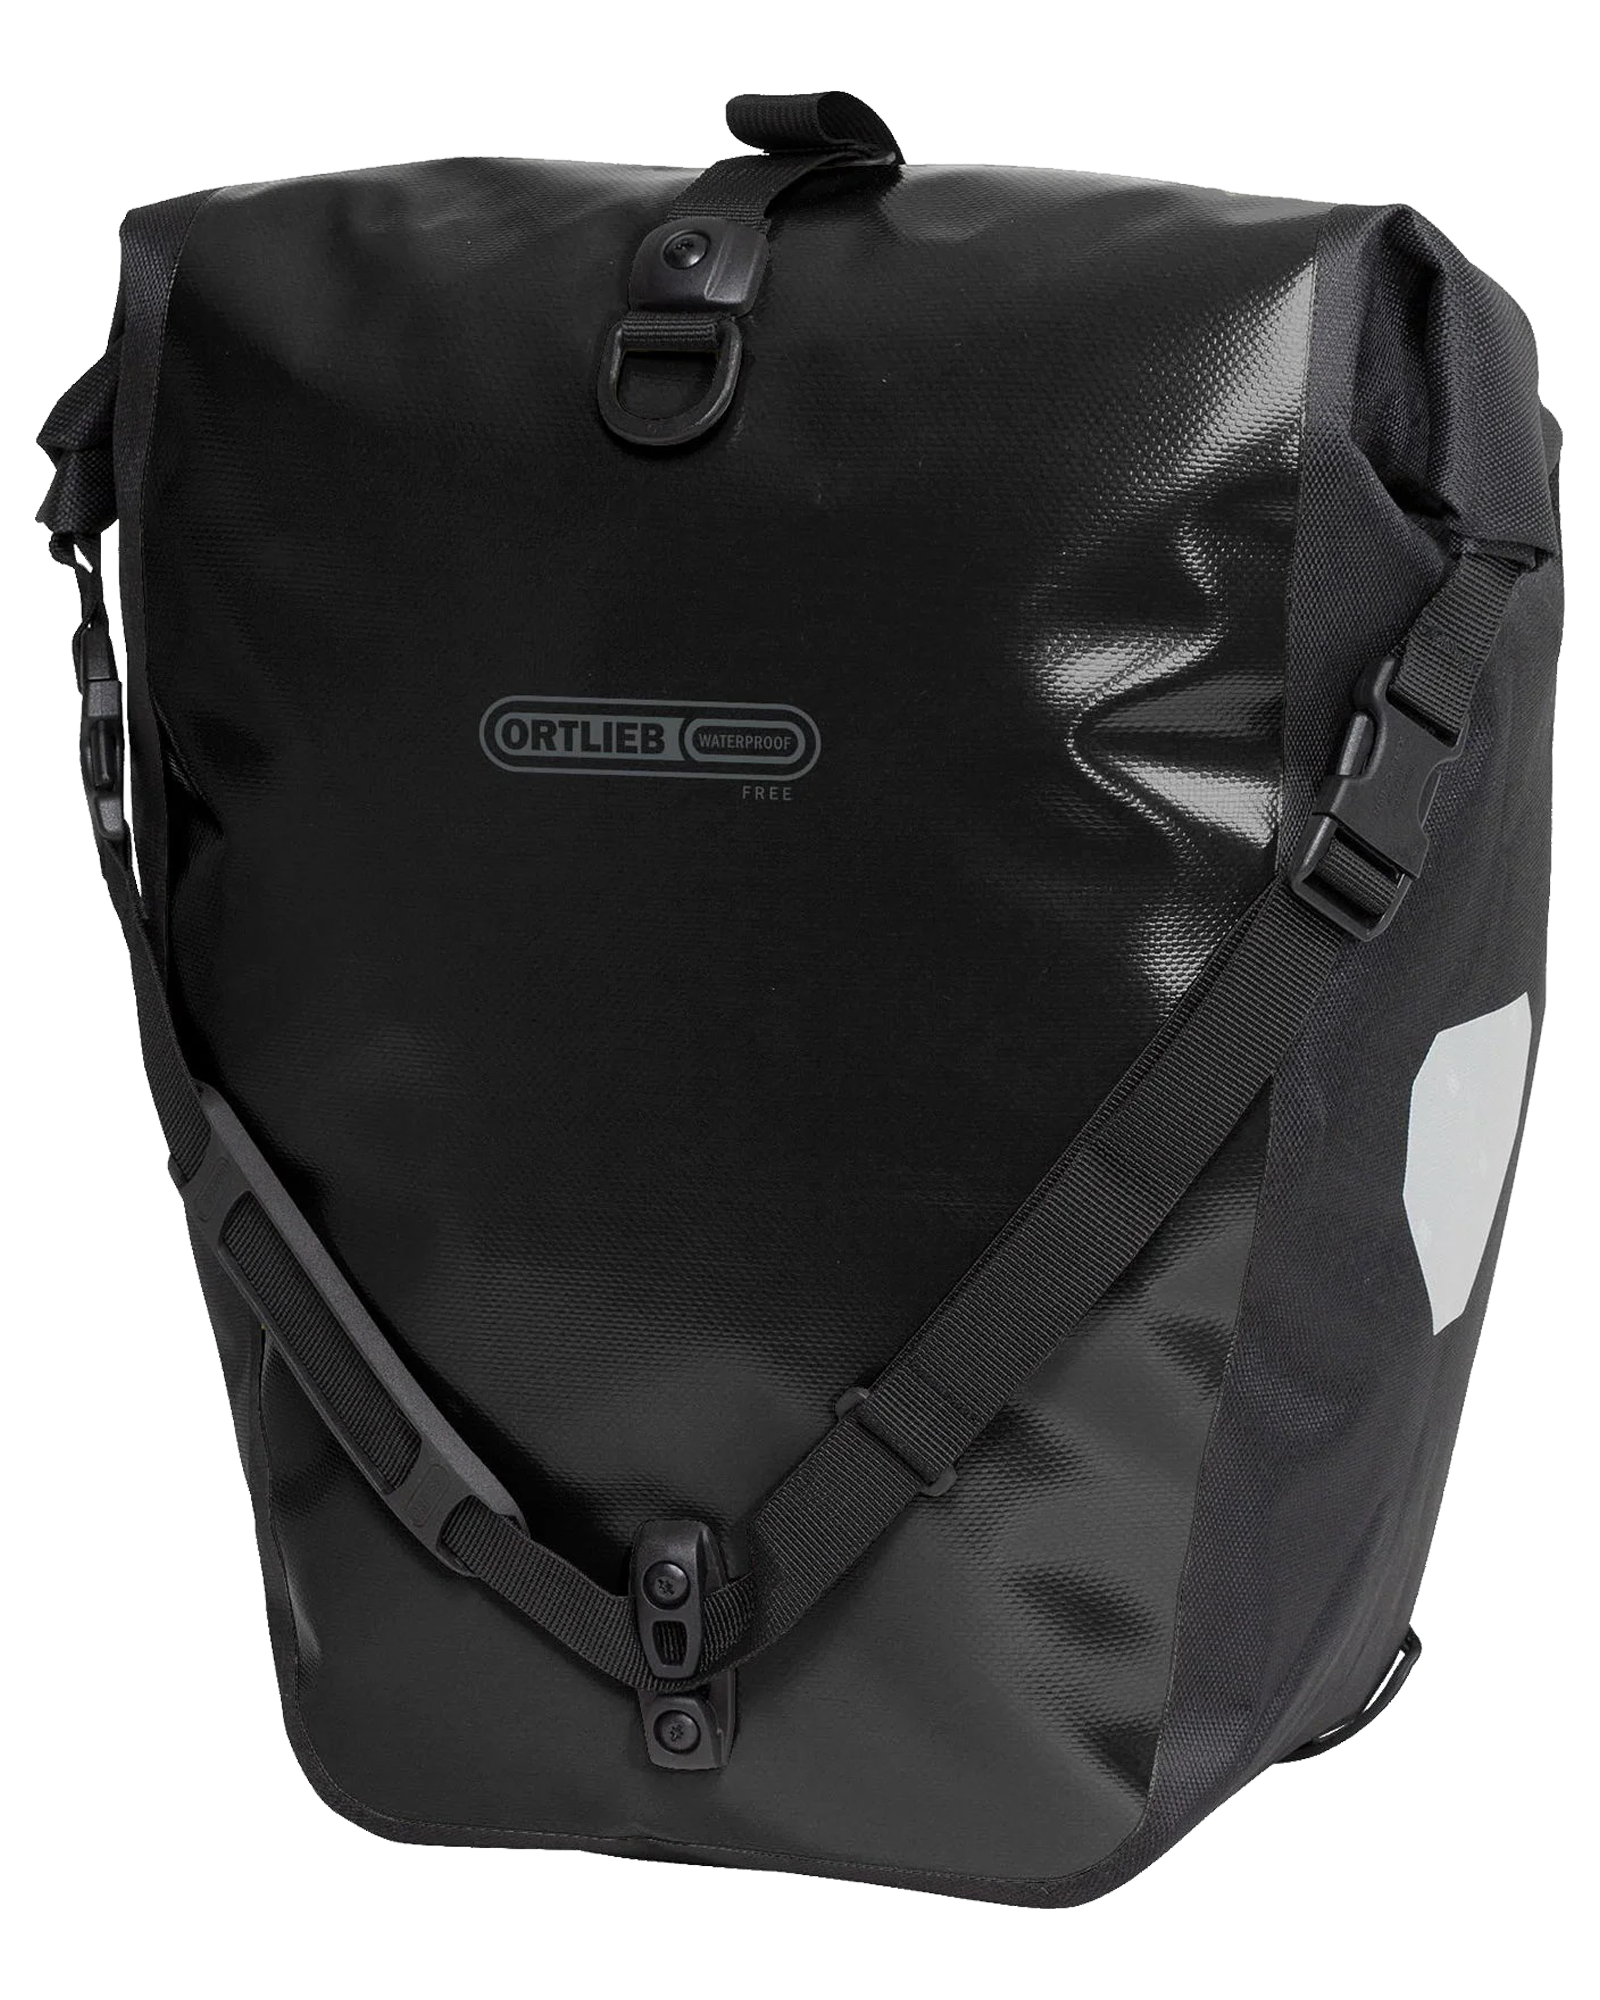 Ortlieb Back-Roller Free QL 3.1 Bike Bag | CANYON LB